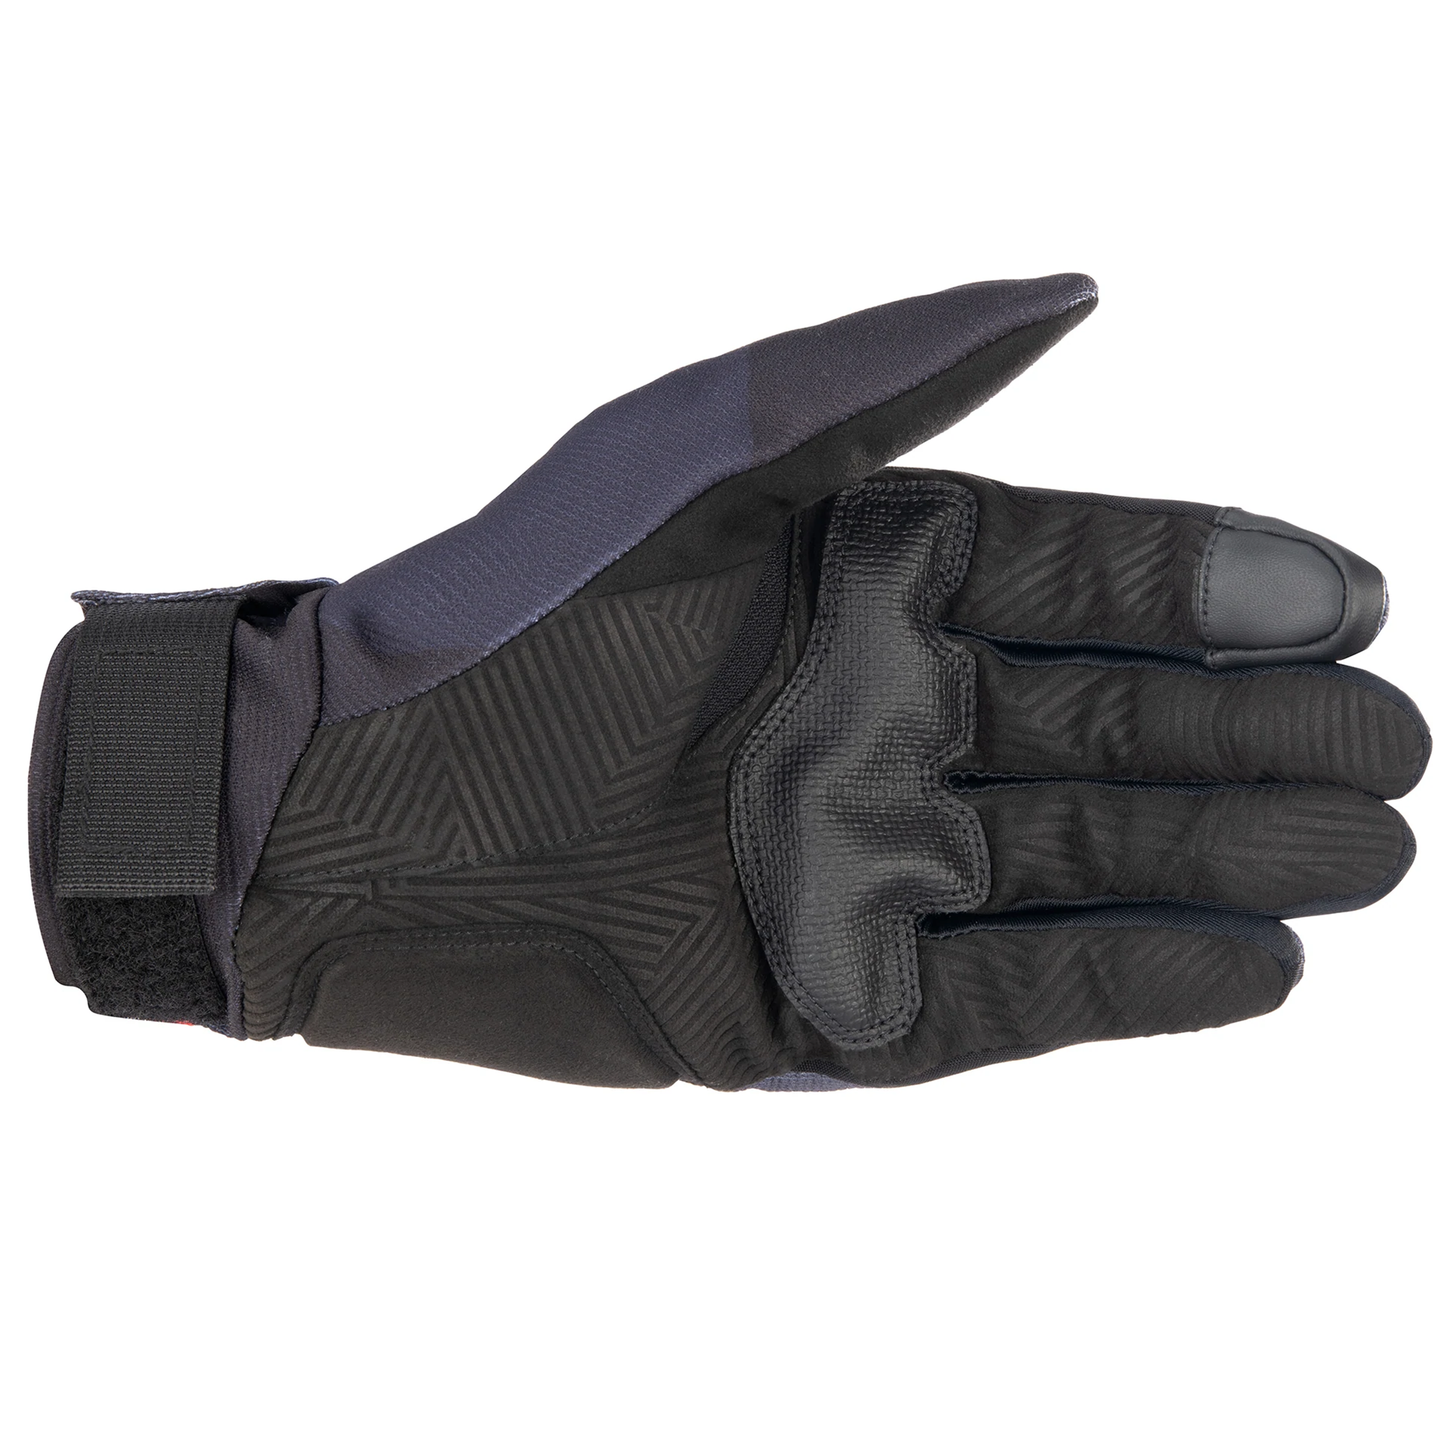 Alpinestars Reef Gloves - Black/Grey Camo/Bright Red (1343)